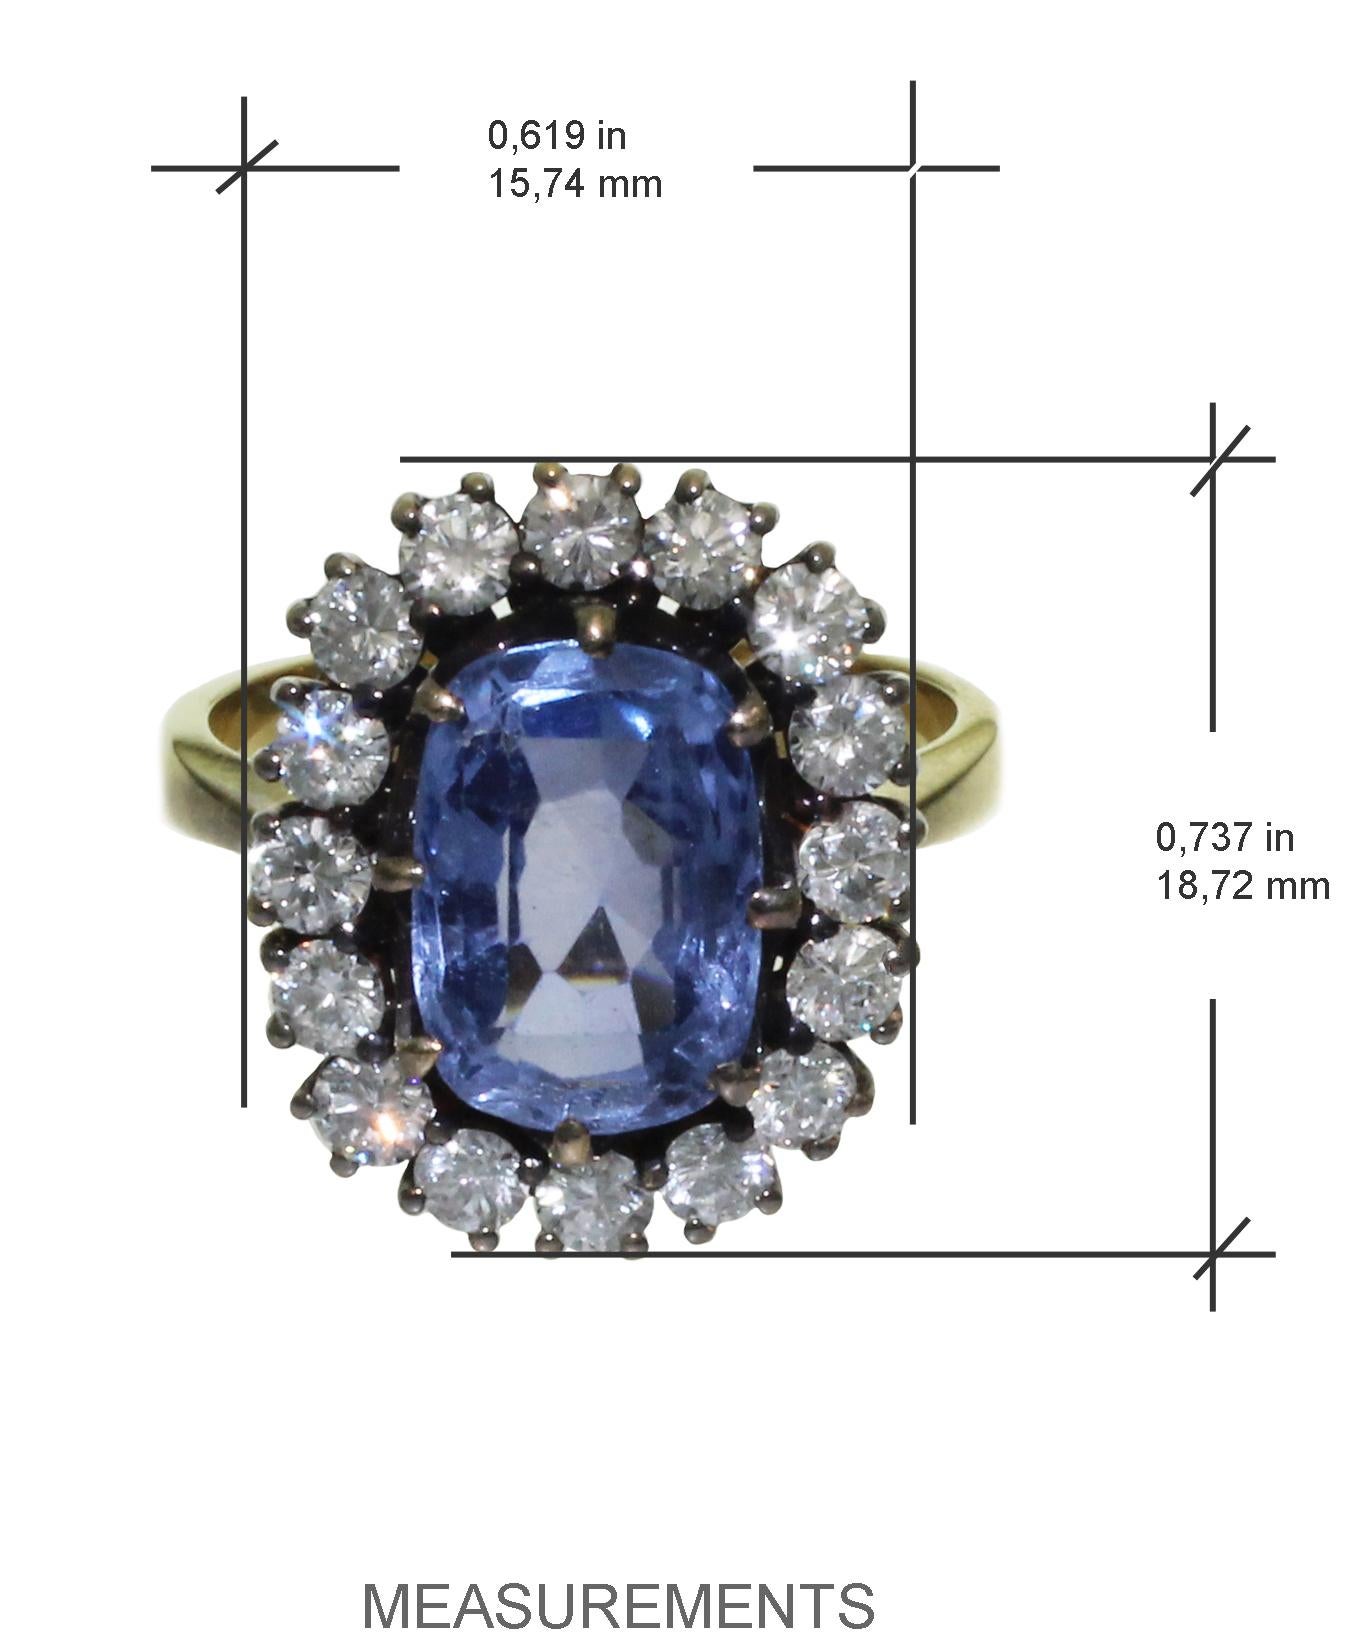 5 carat sapphire ring